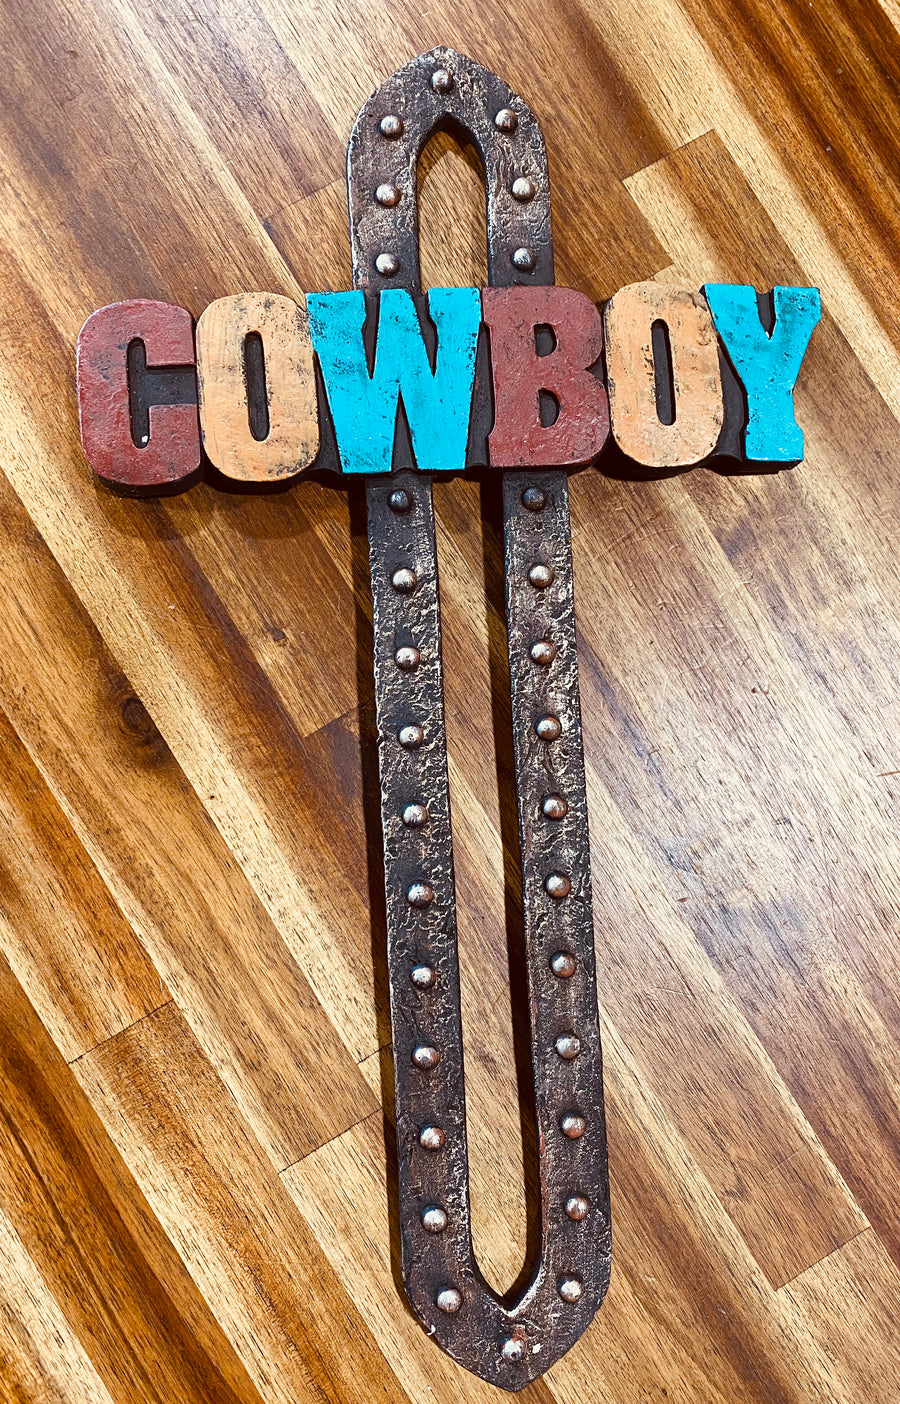 ‘Cowboy’ Cross